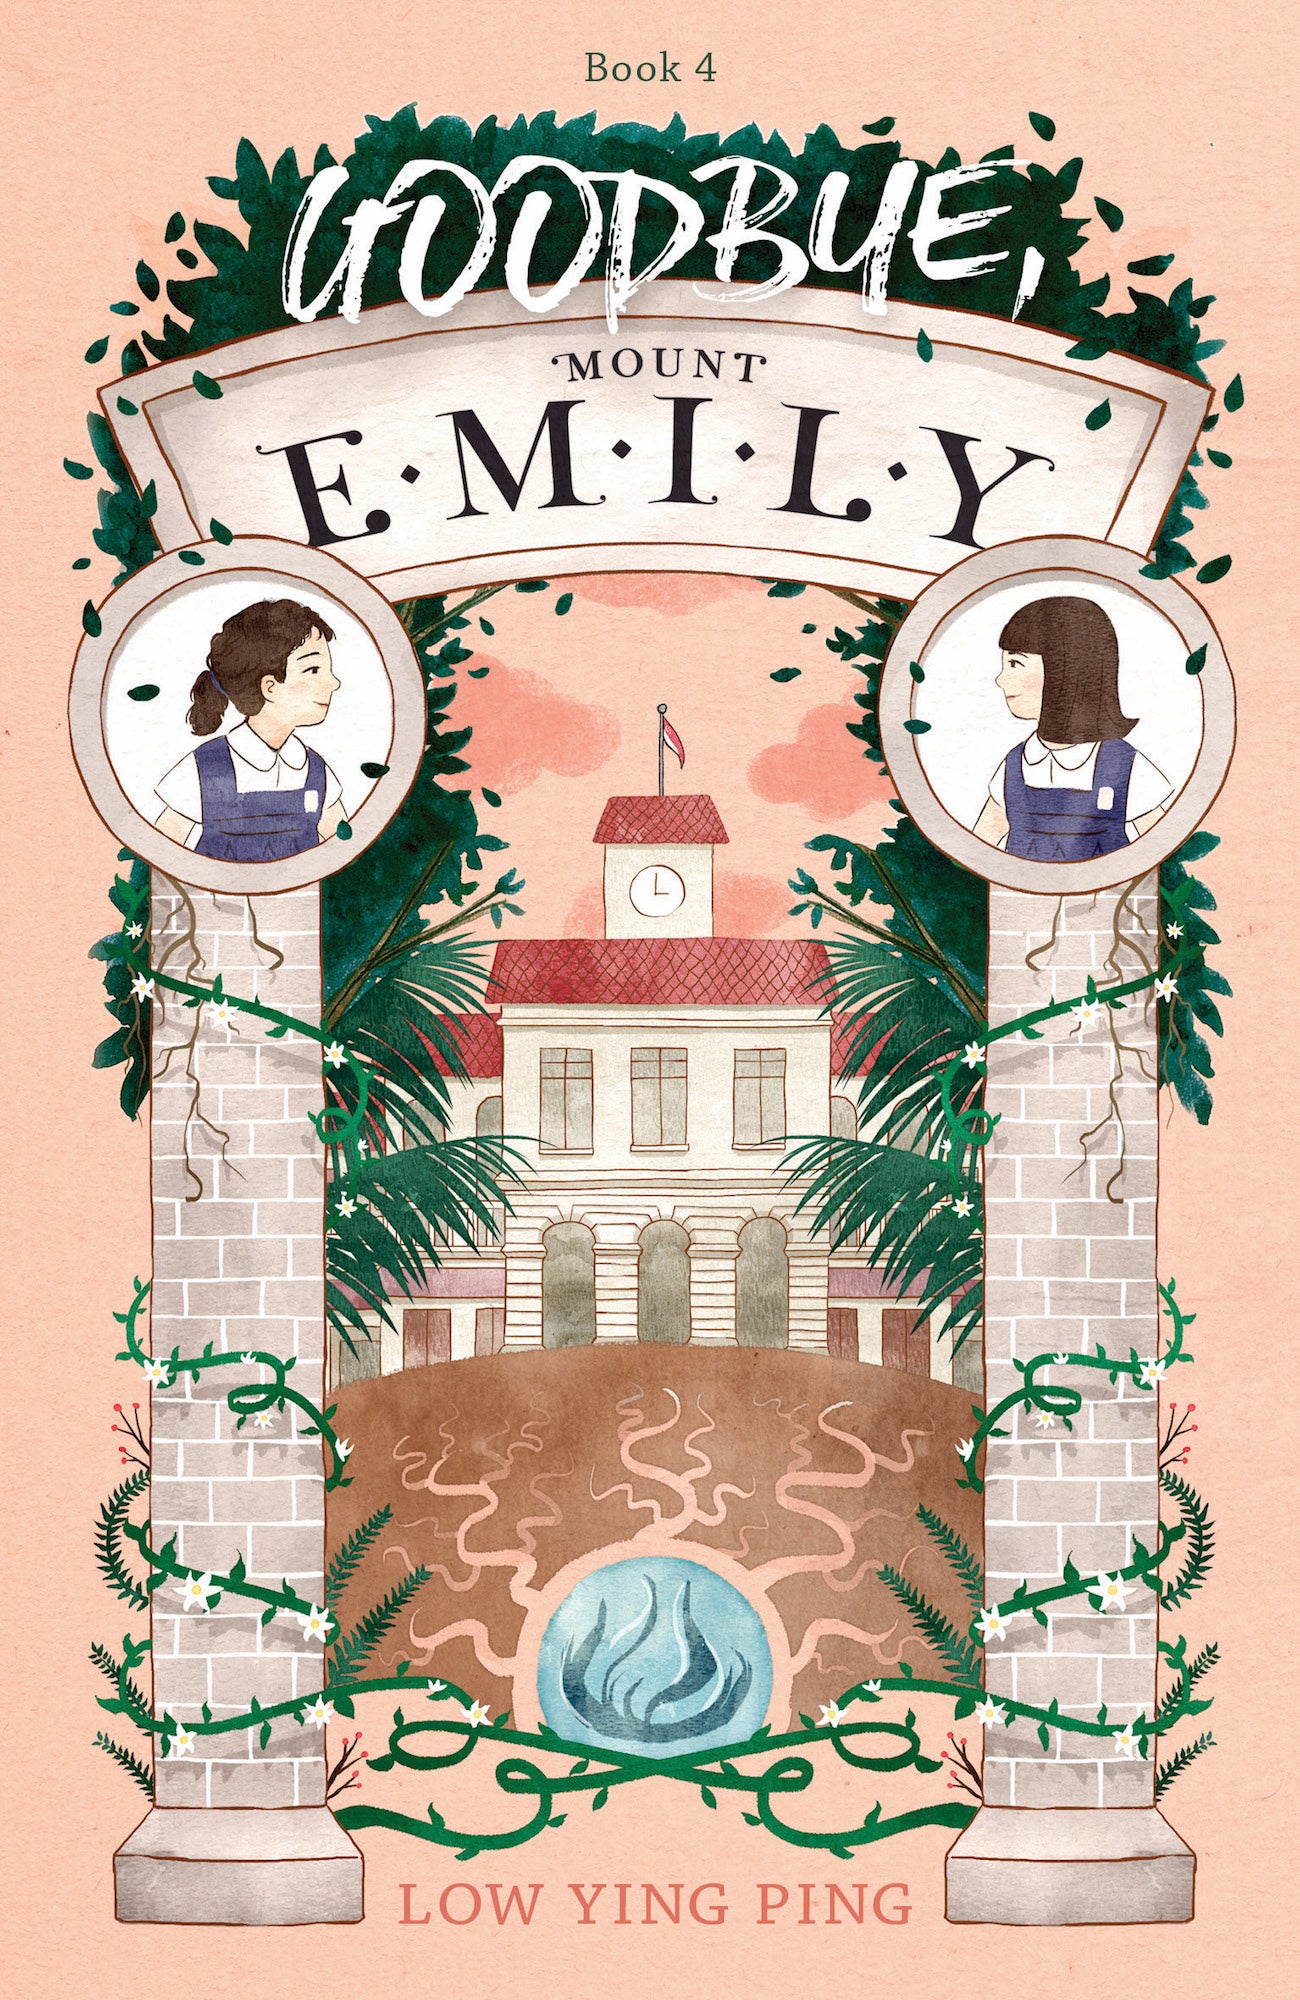 Goodbye, Mount Emily (Book 4)